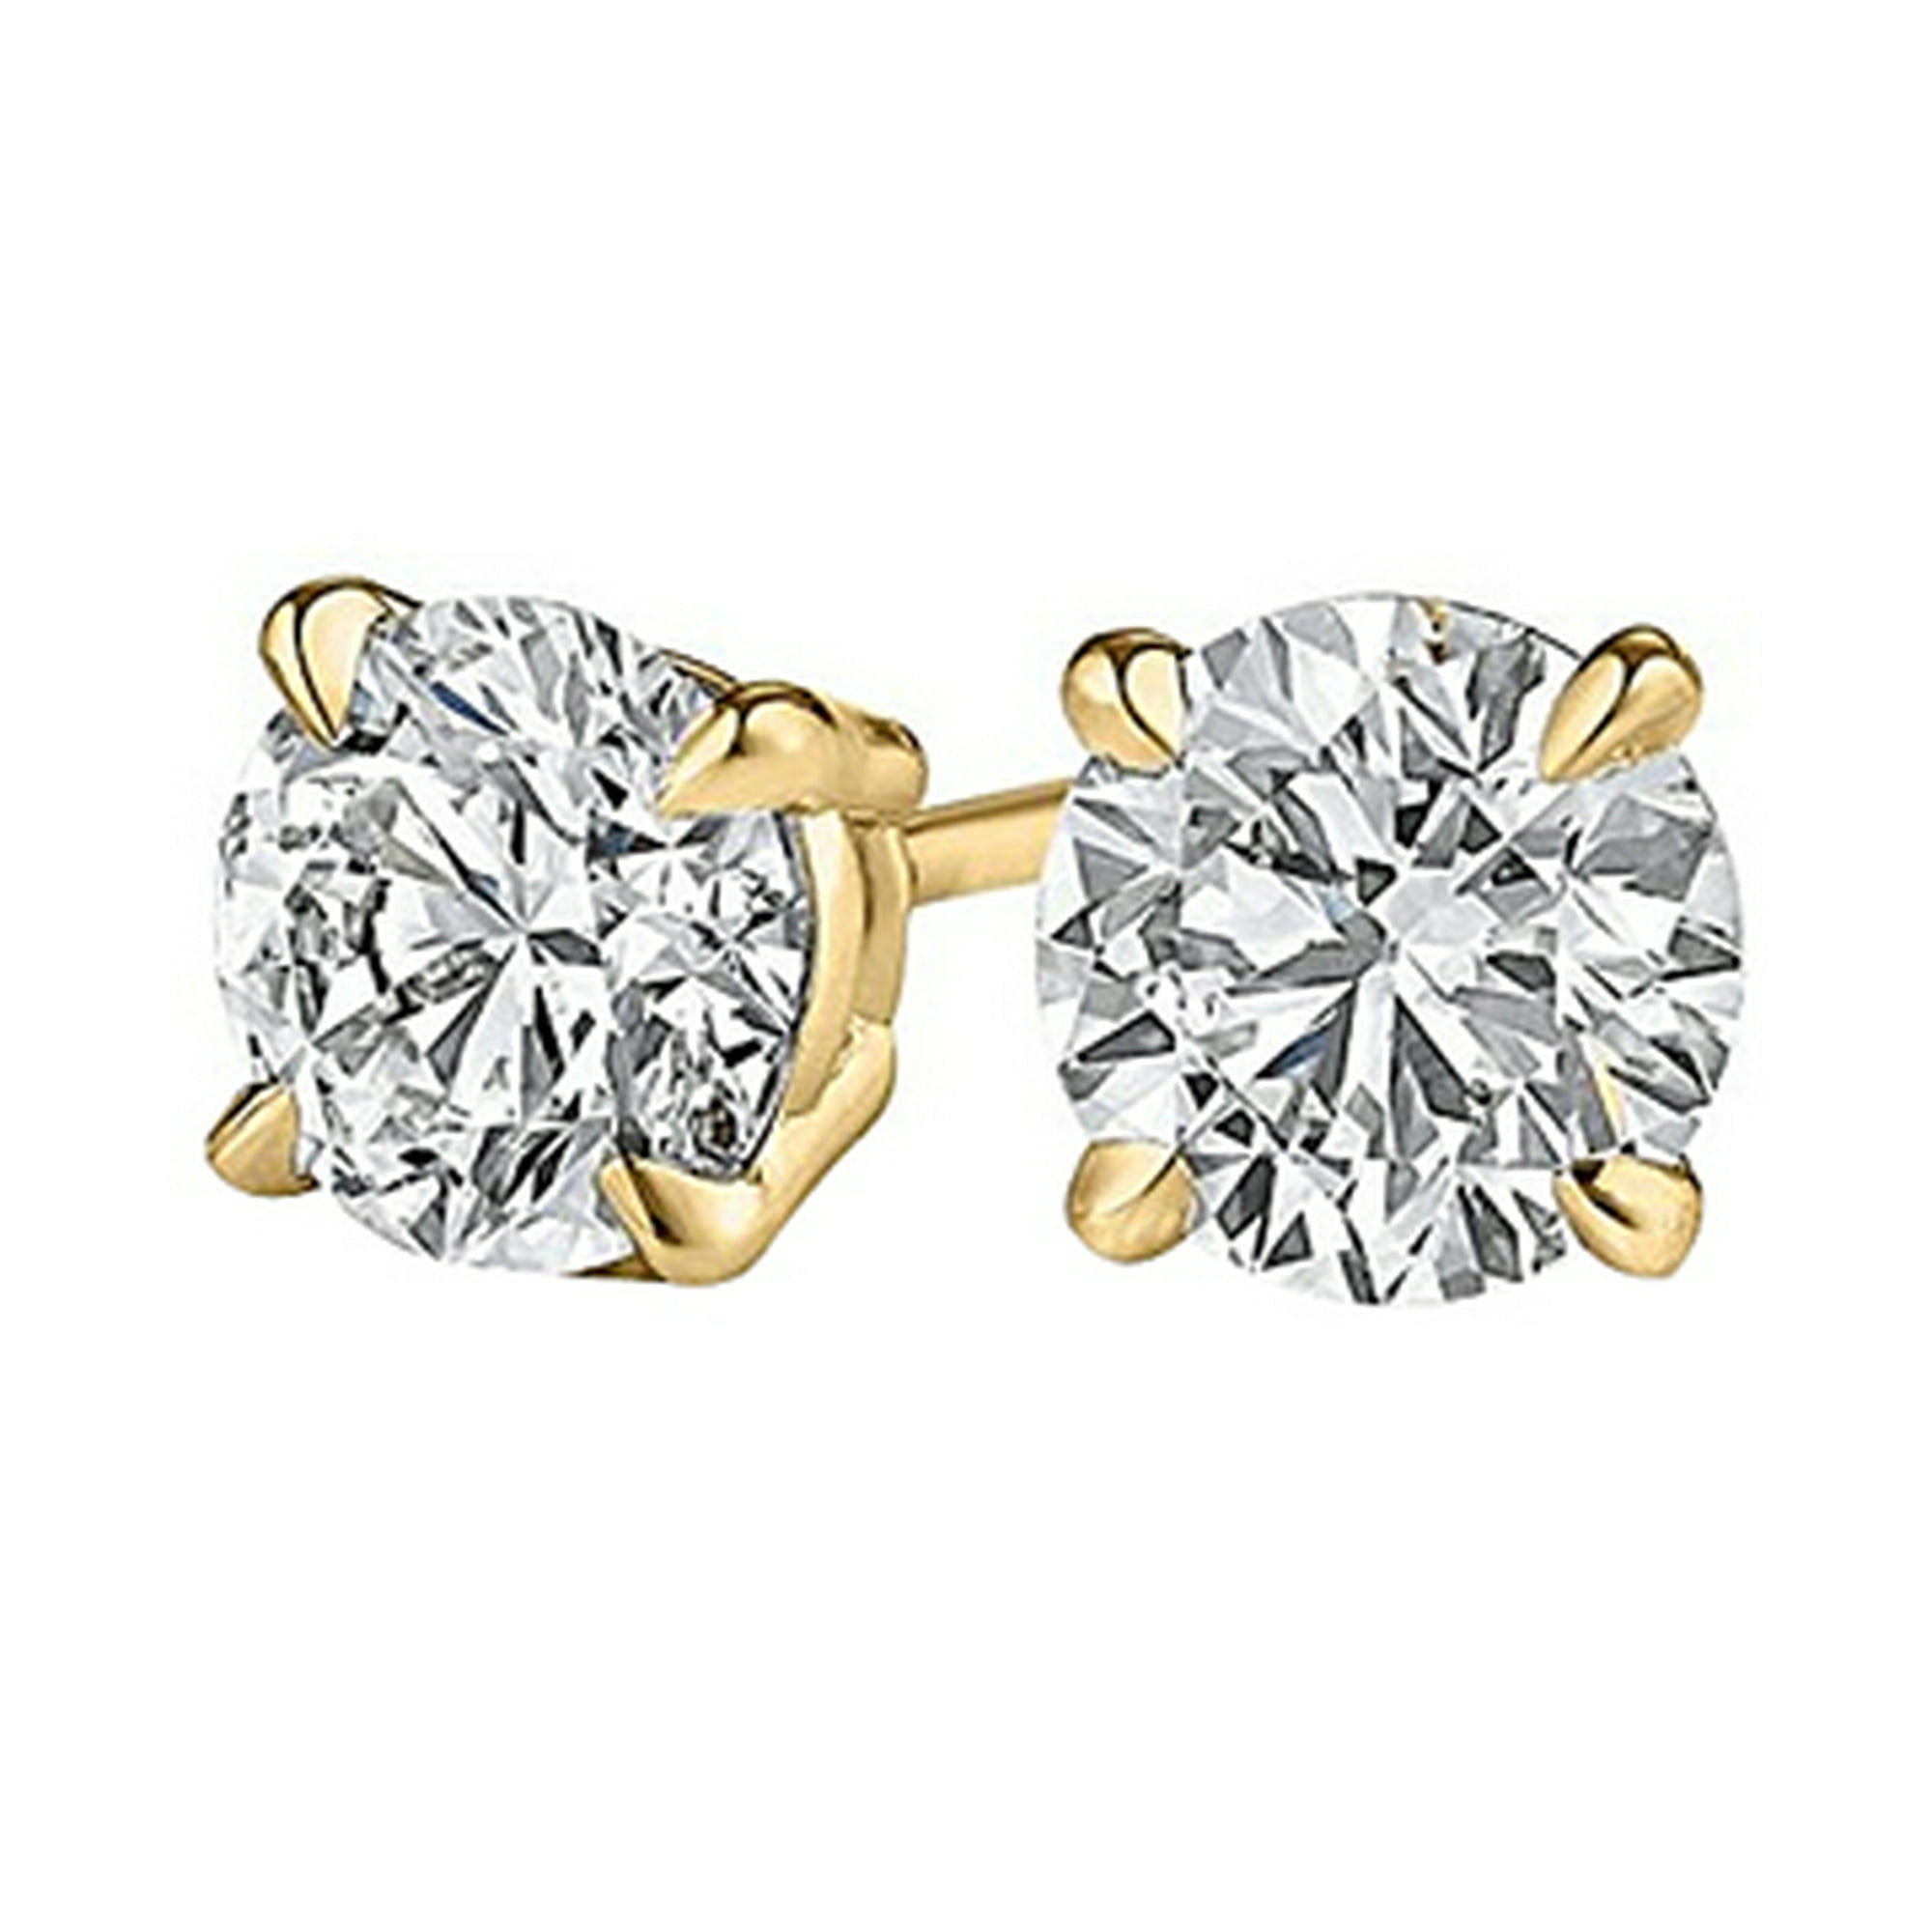 Jewelry Diamond Stud Earrings Push Back In 14k Yellow Gold